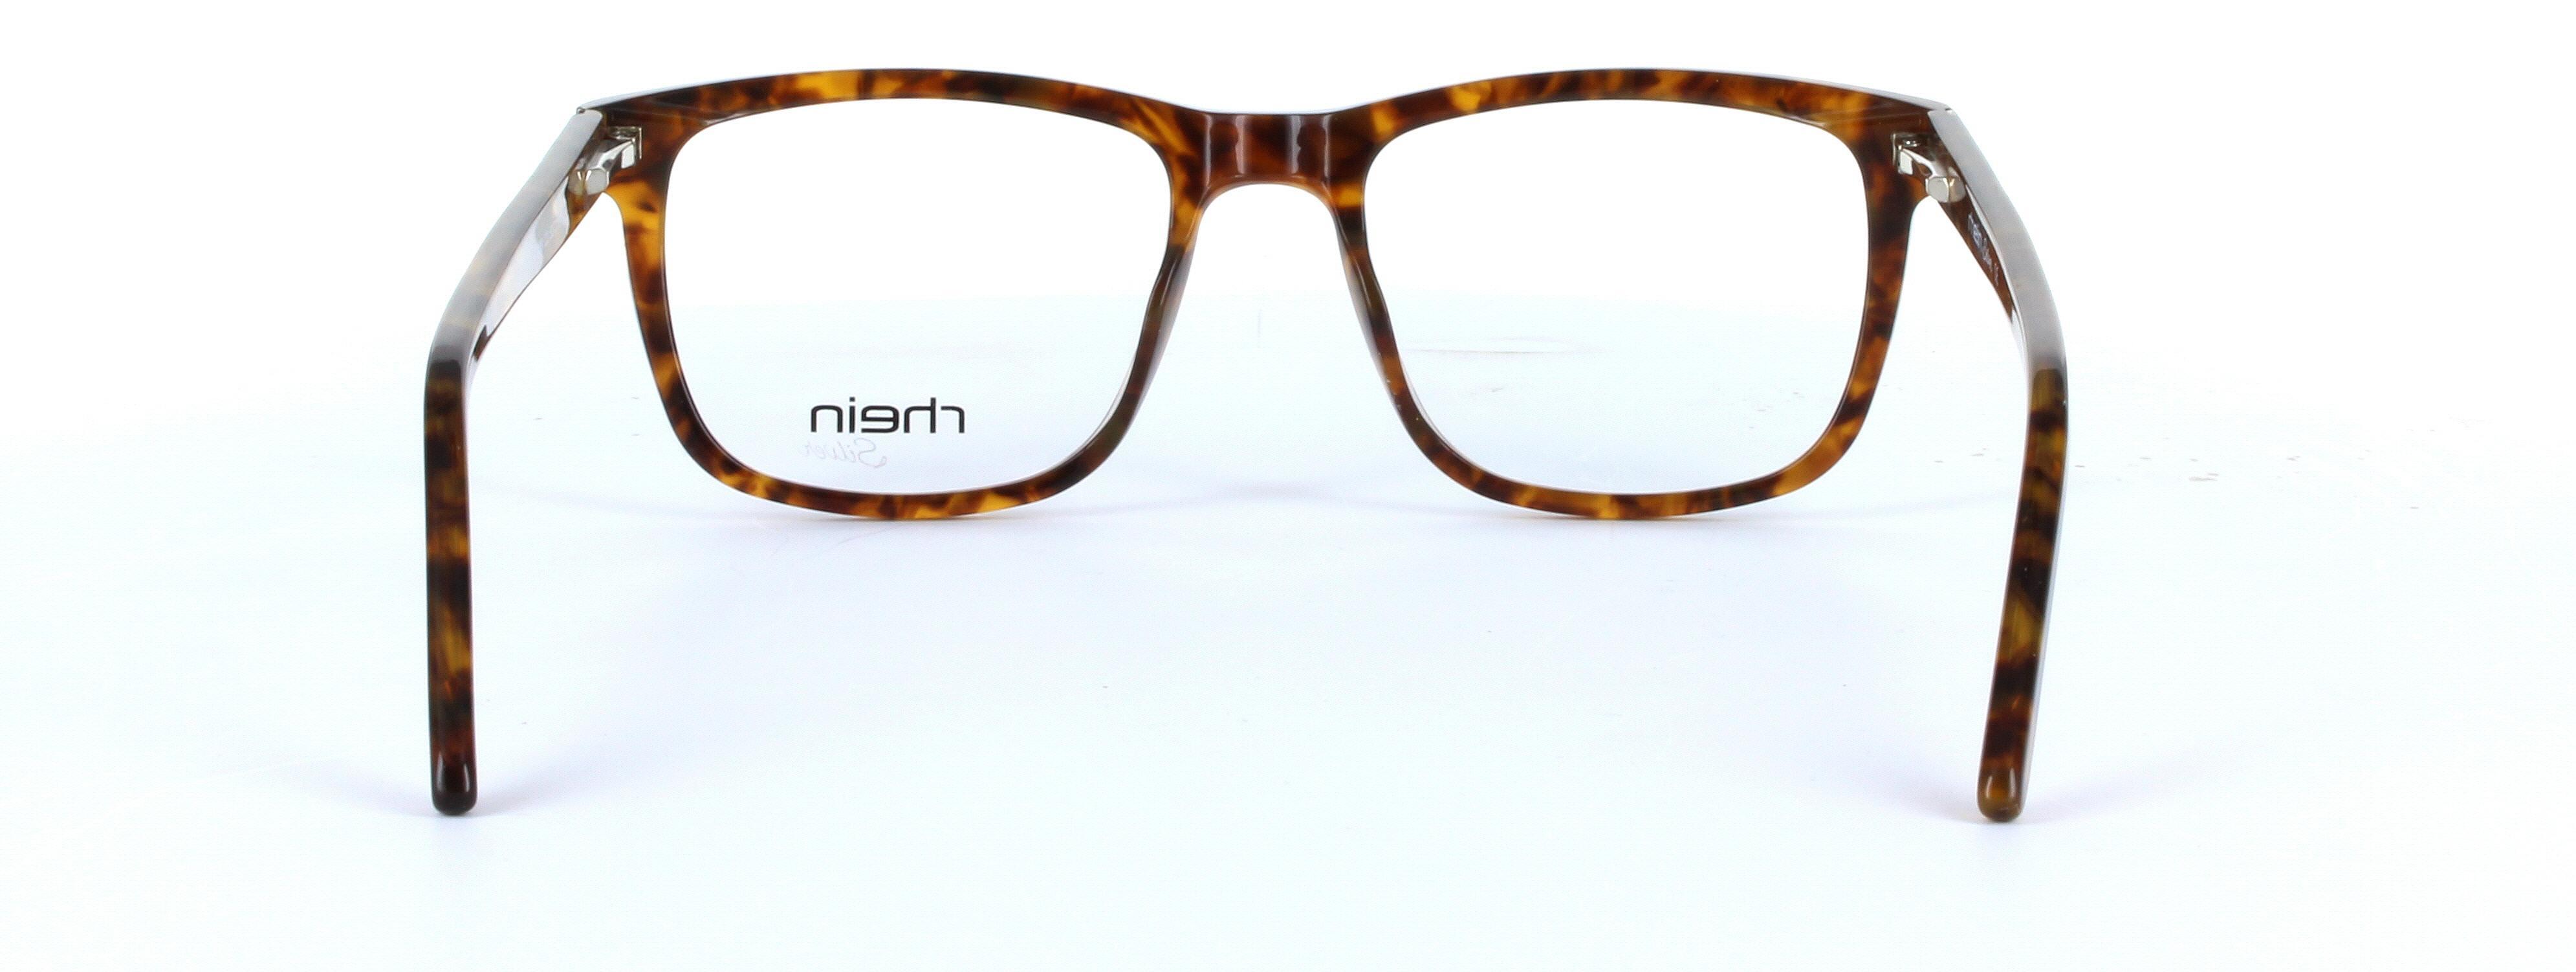 Morgan Tortoise Full Rim Square Plastic Glasses - Image View 3